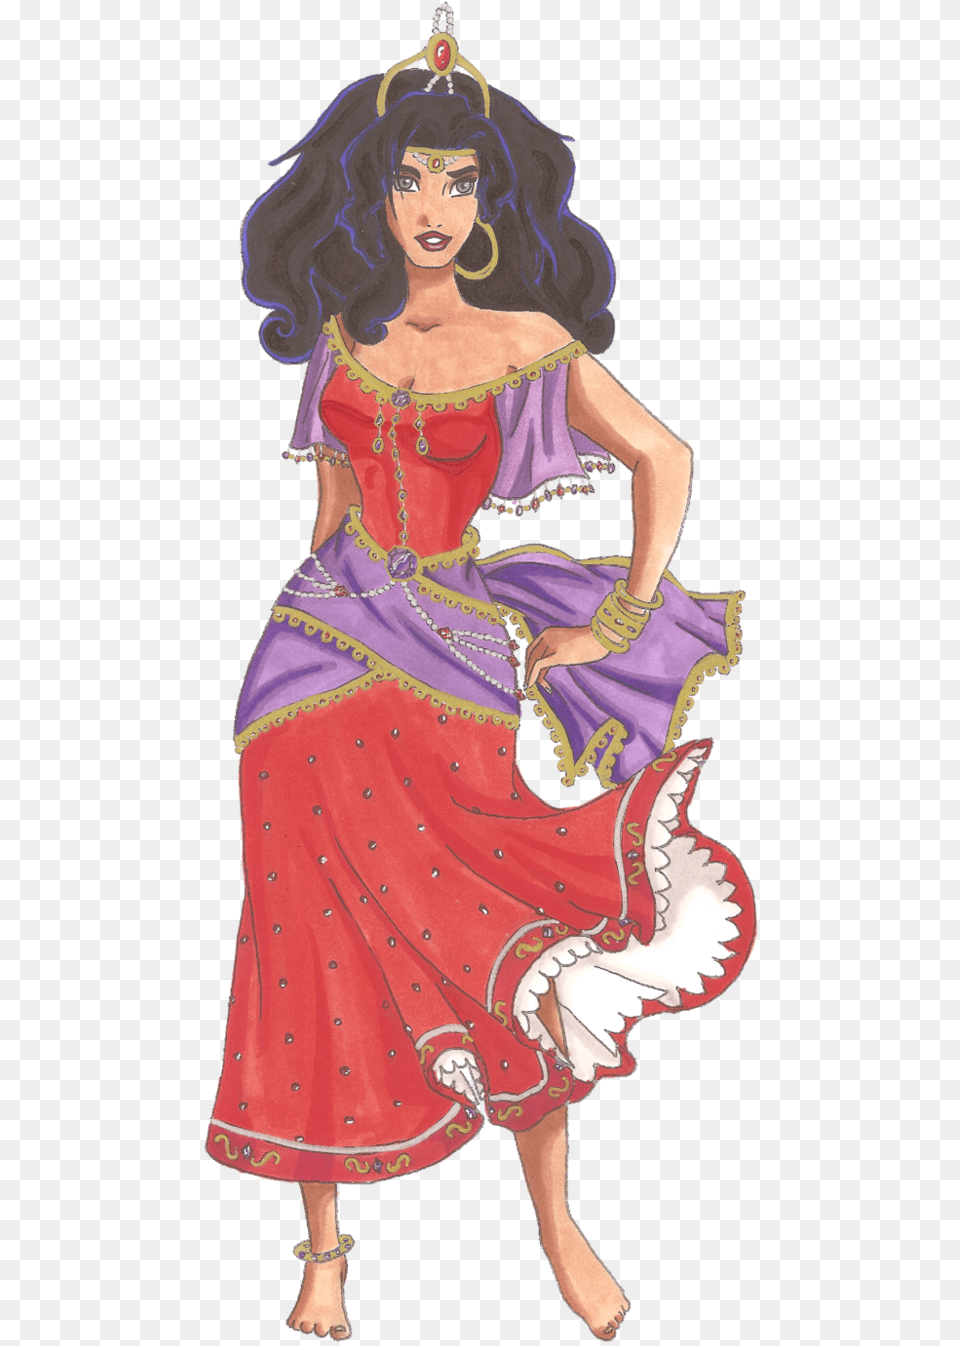 Disney Esmeralda, Adult, Dancing, Female, Leisure Activities Png Image